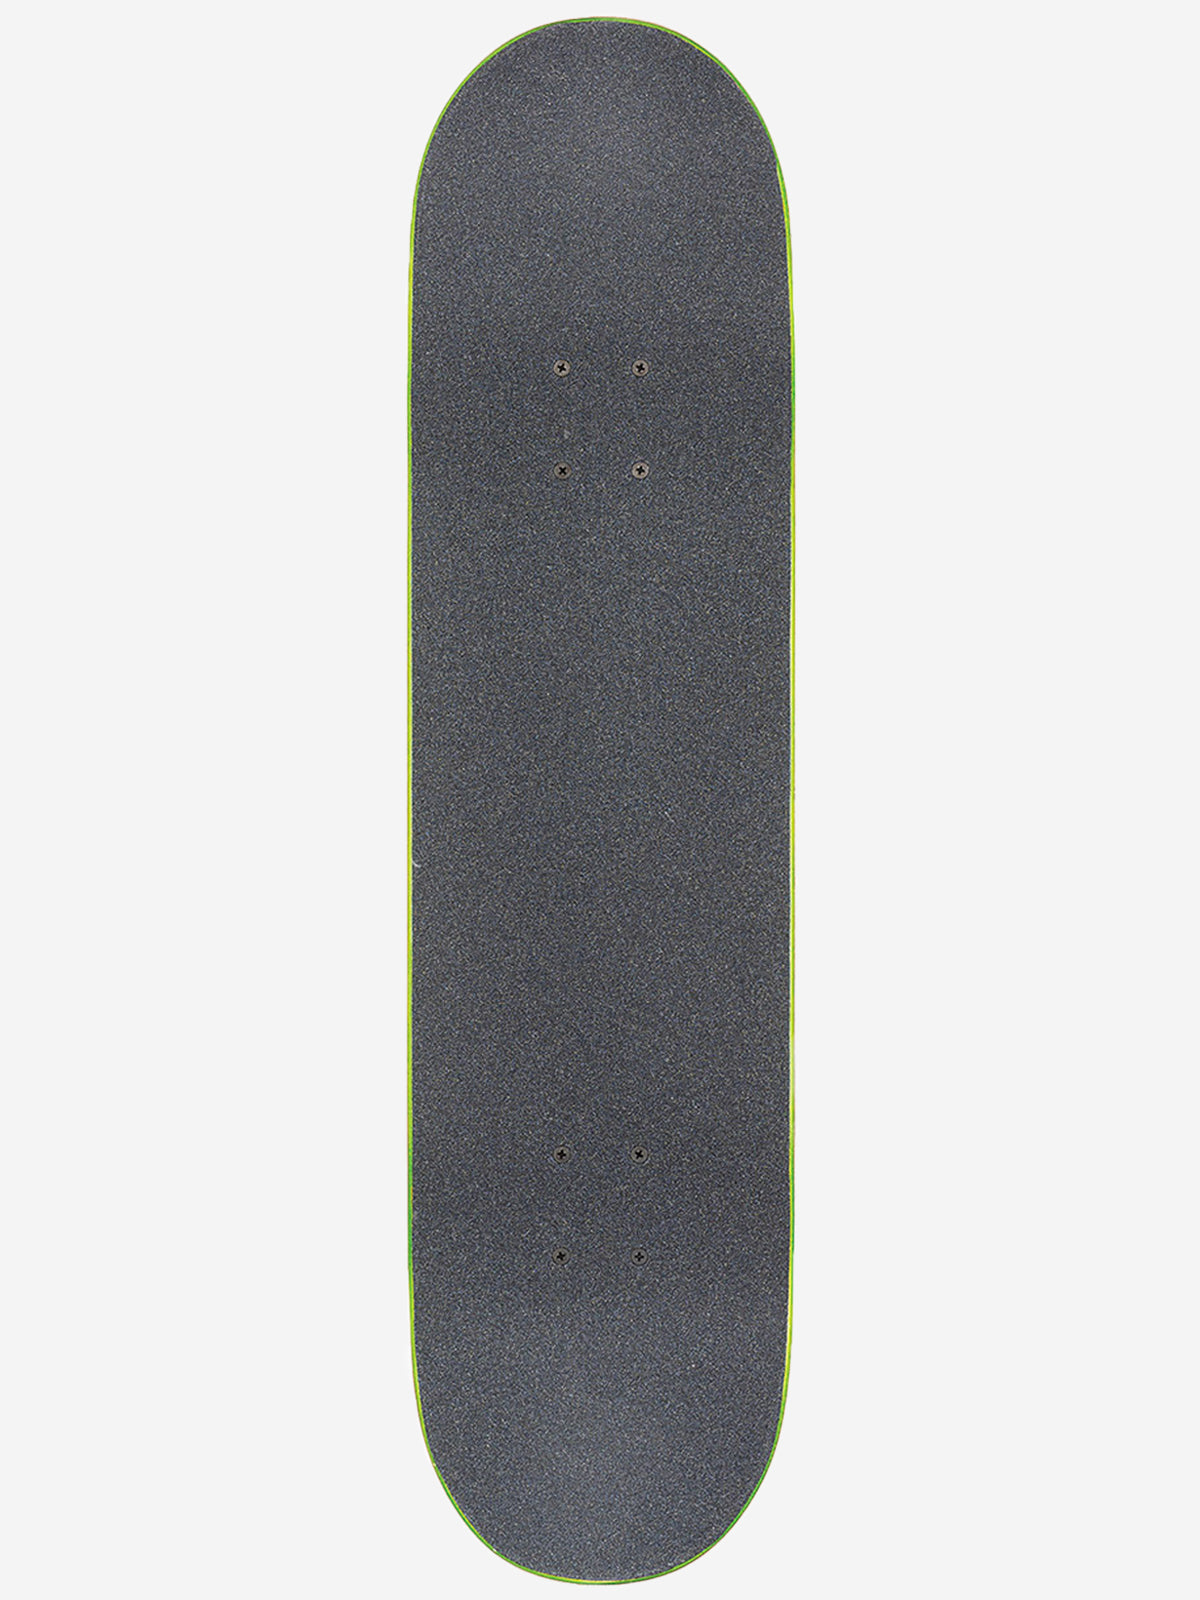 g1 stay tuned zwart 8.0" compleet skateboard